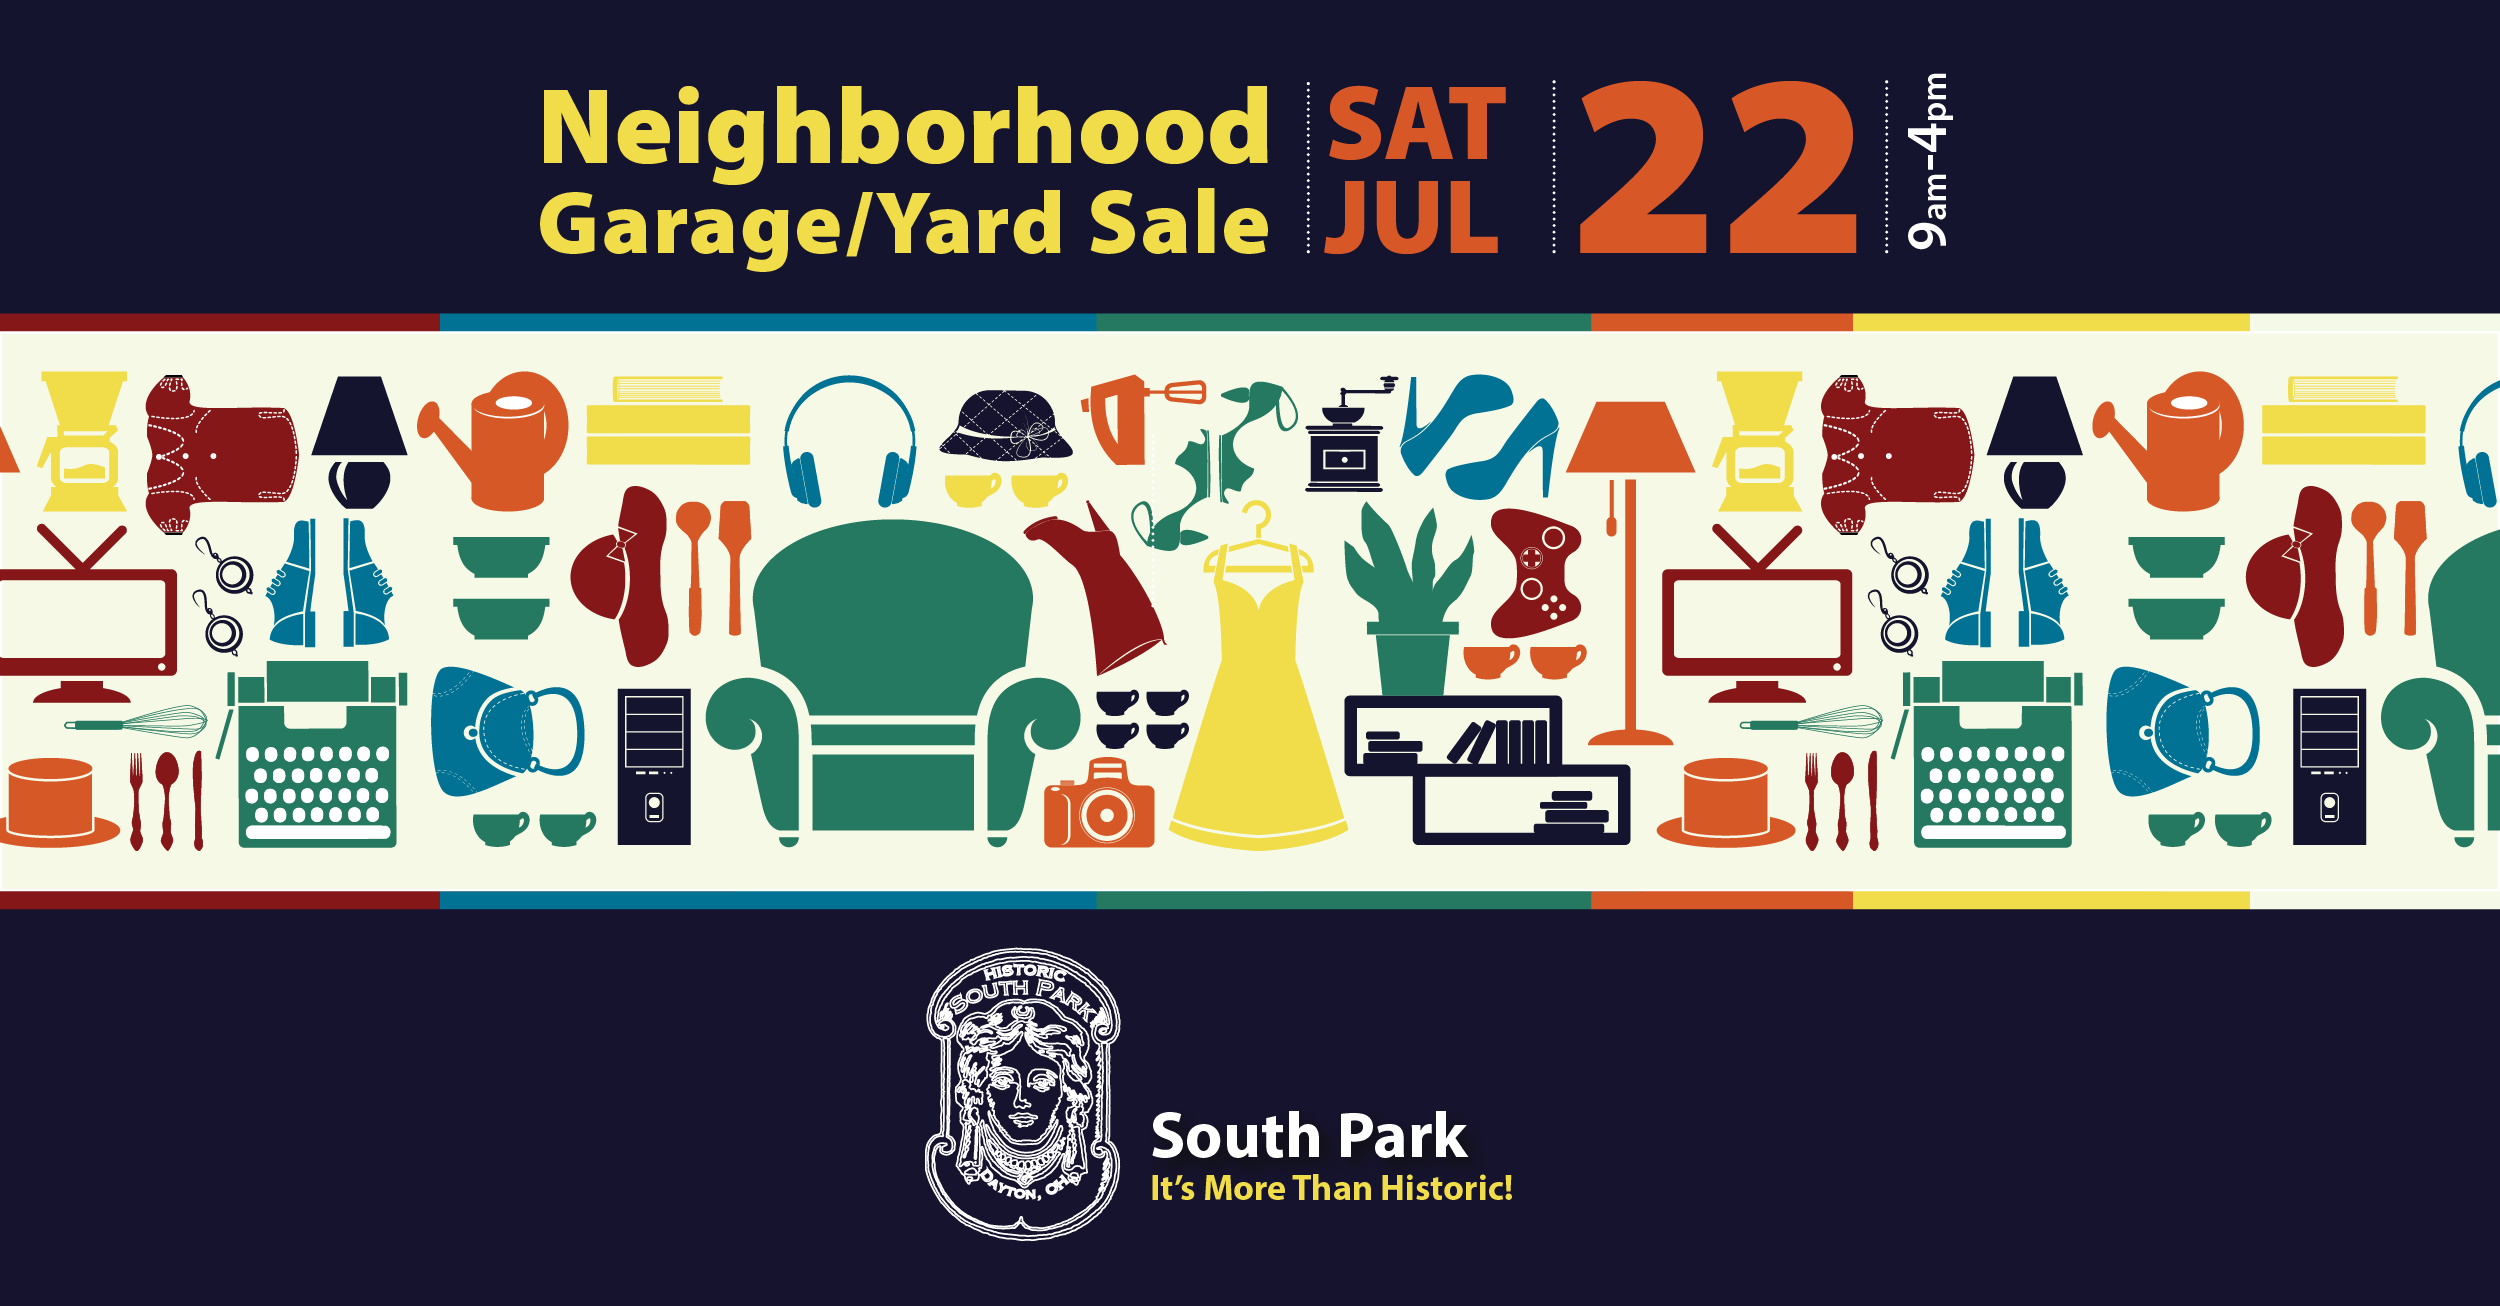 Neighborhood-Wide Garage/Yard Sale July 22 – Map Now Available